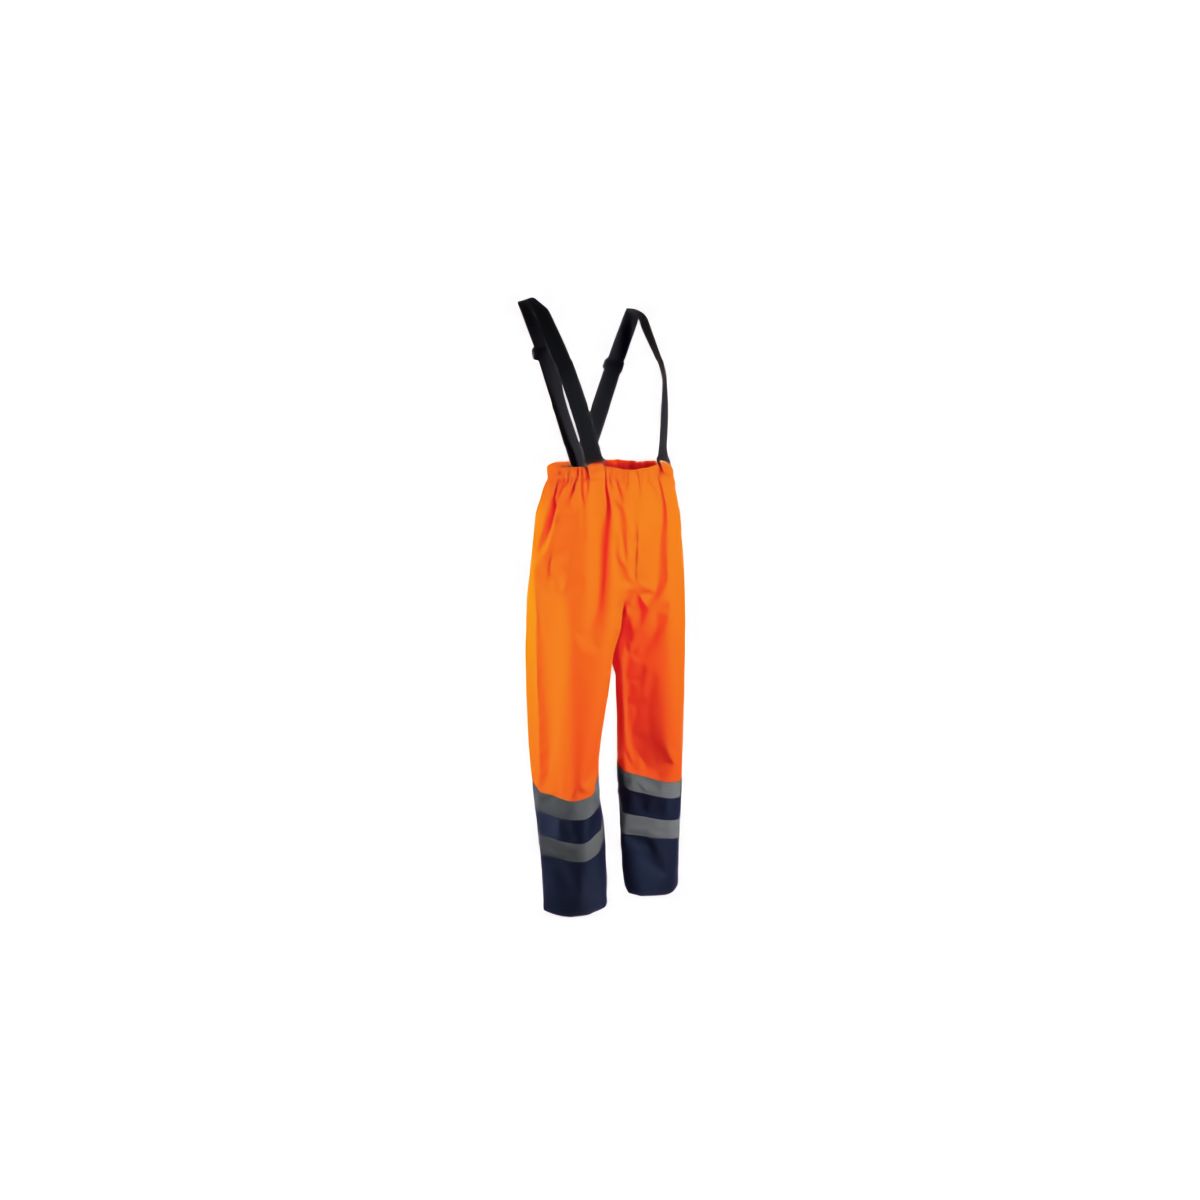 Pantalon Hydra orange et marine - Coverguard - Taille L 0